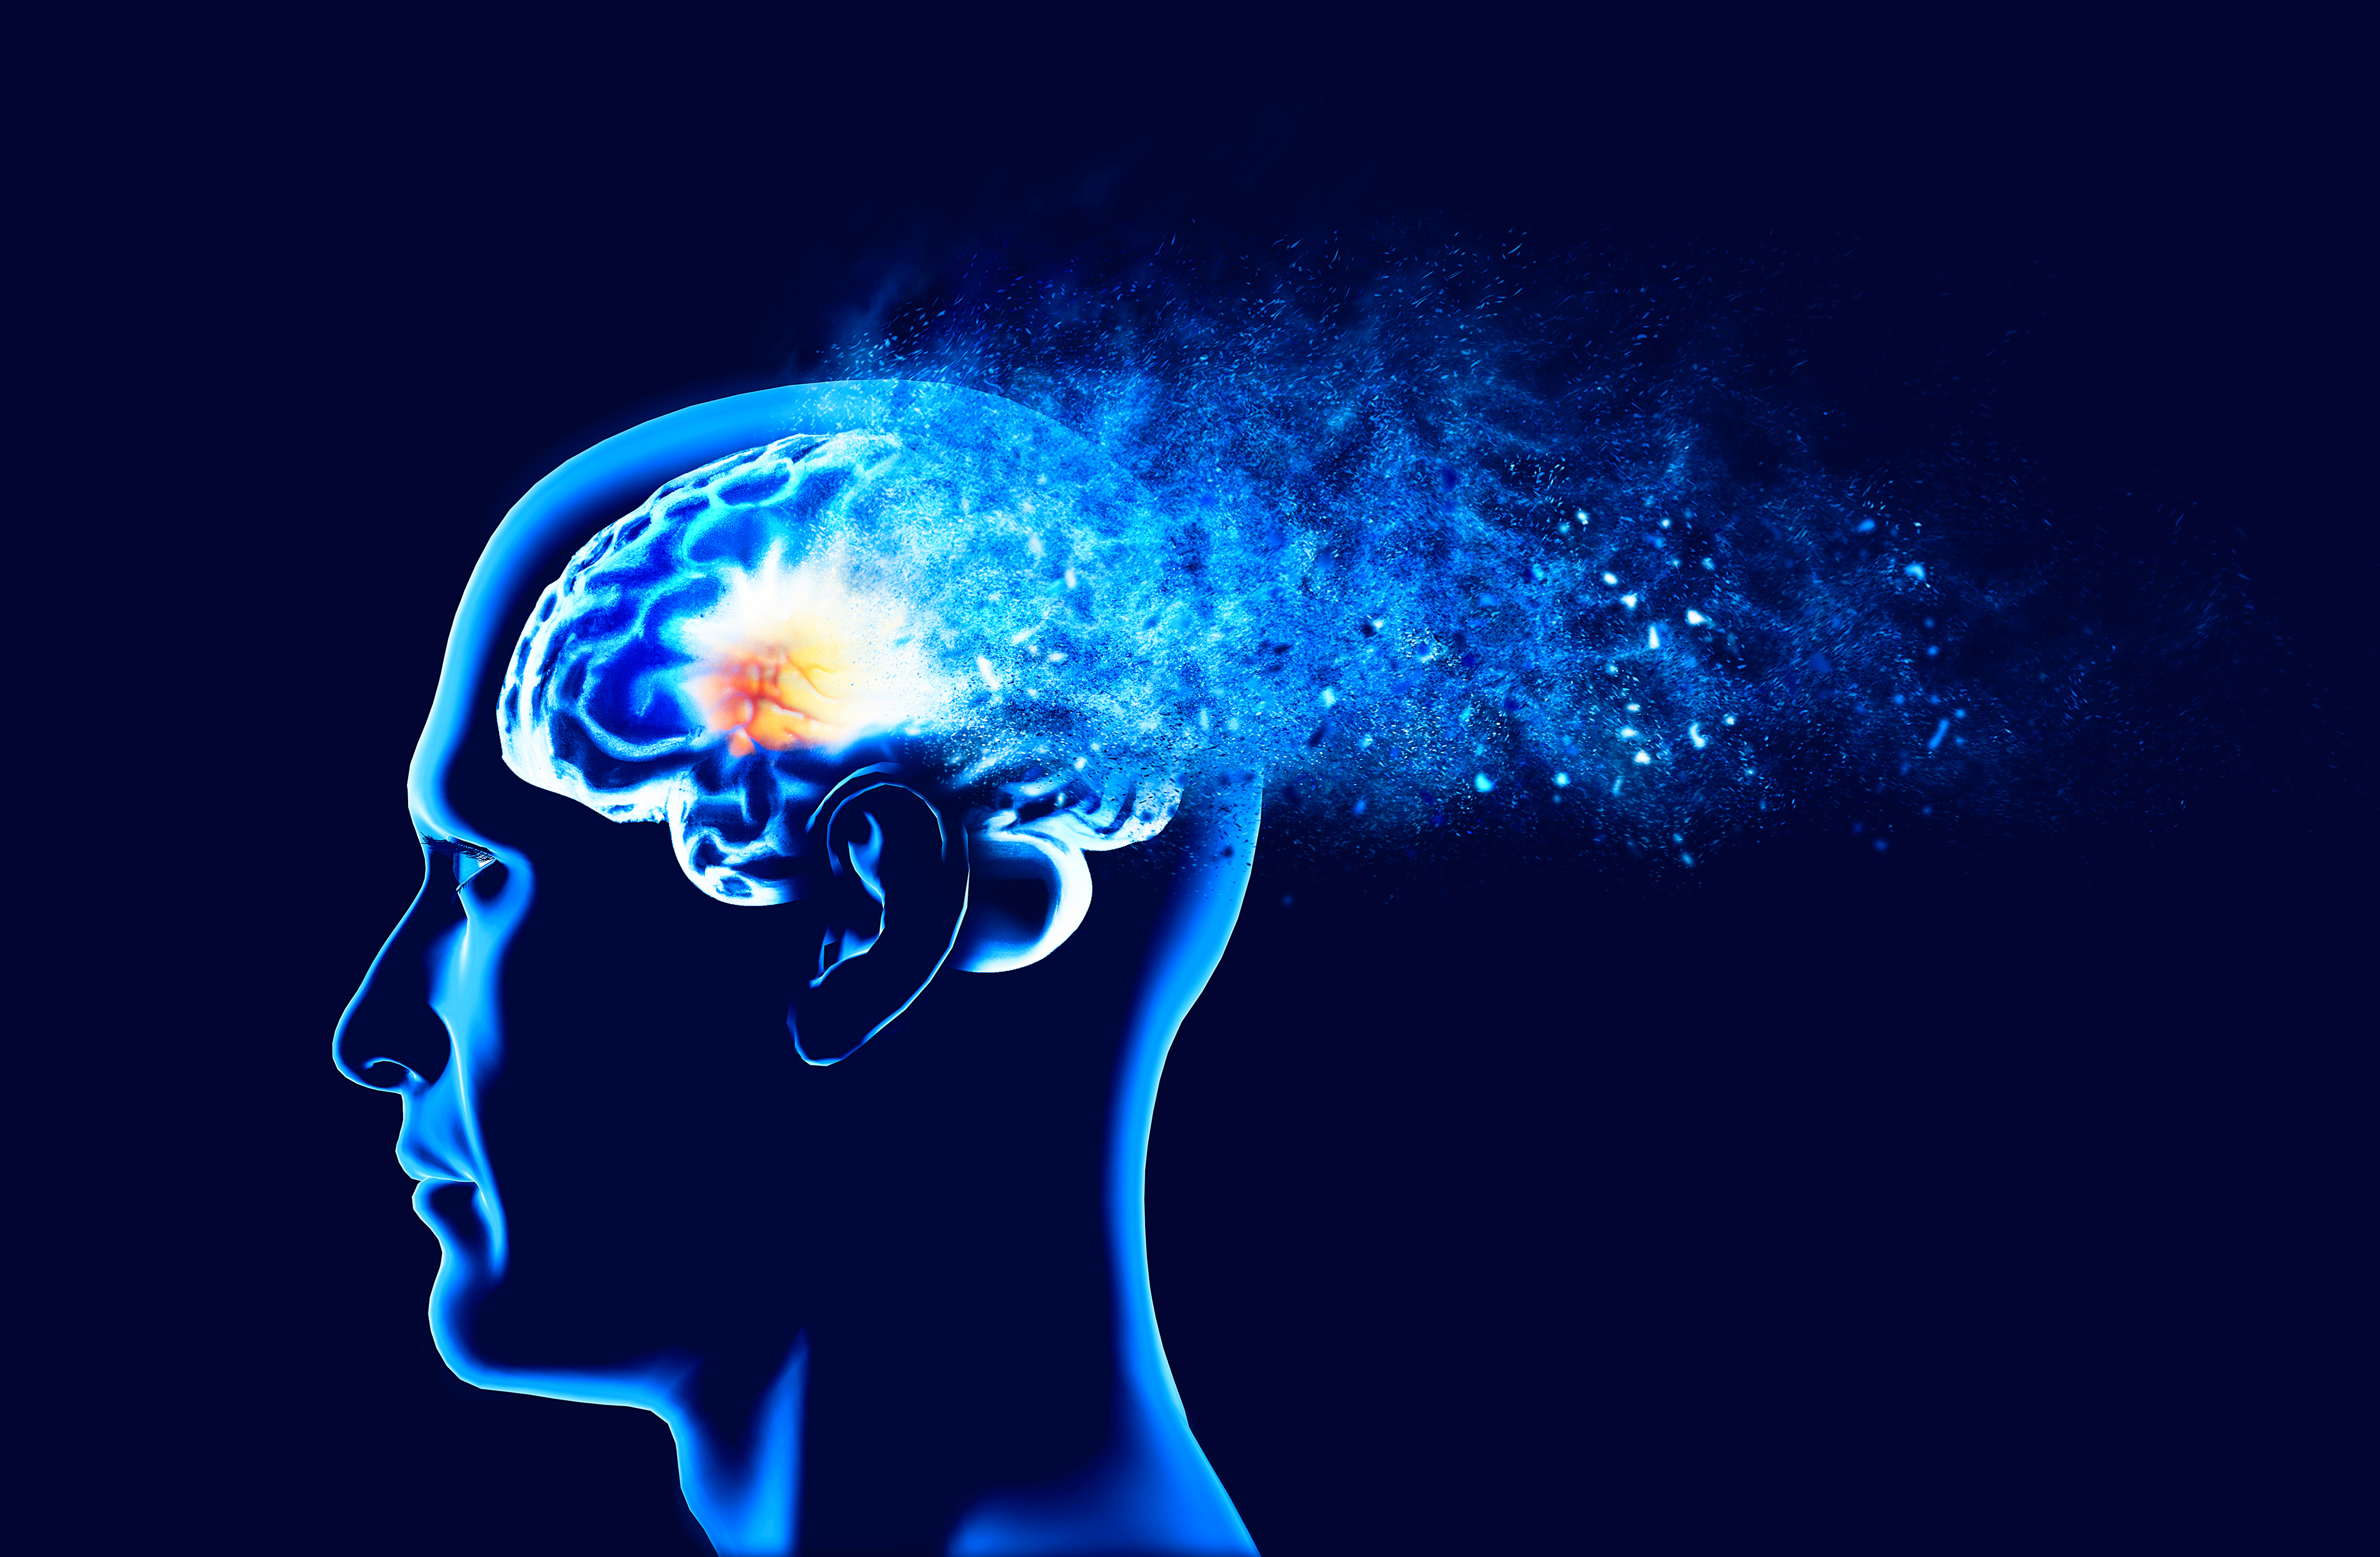 Работа мозга человека. Снижение когнитивных способностей. Мозг человека с Альцгеймером. Brain disease